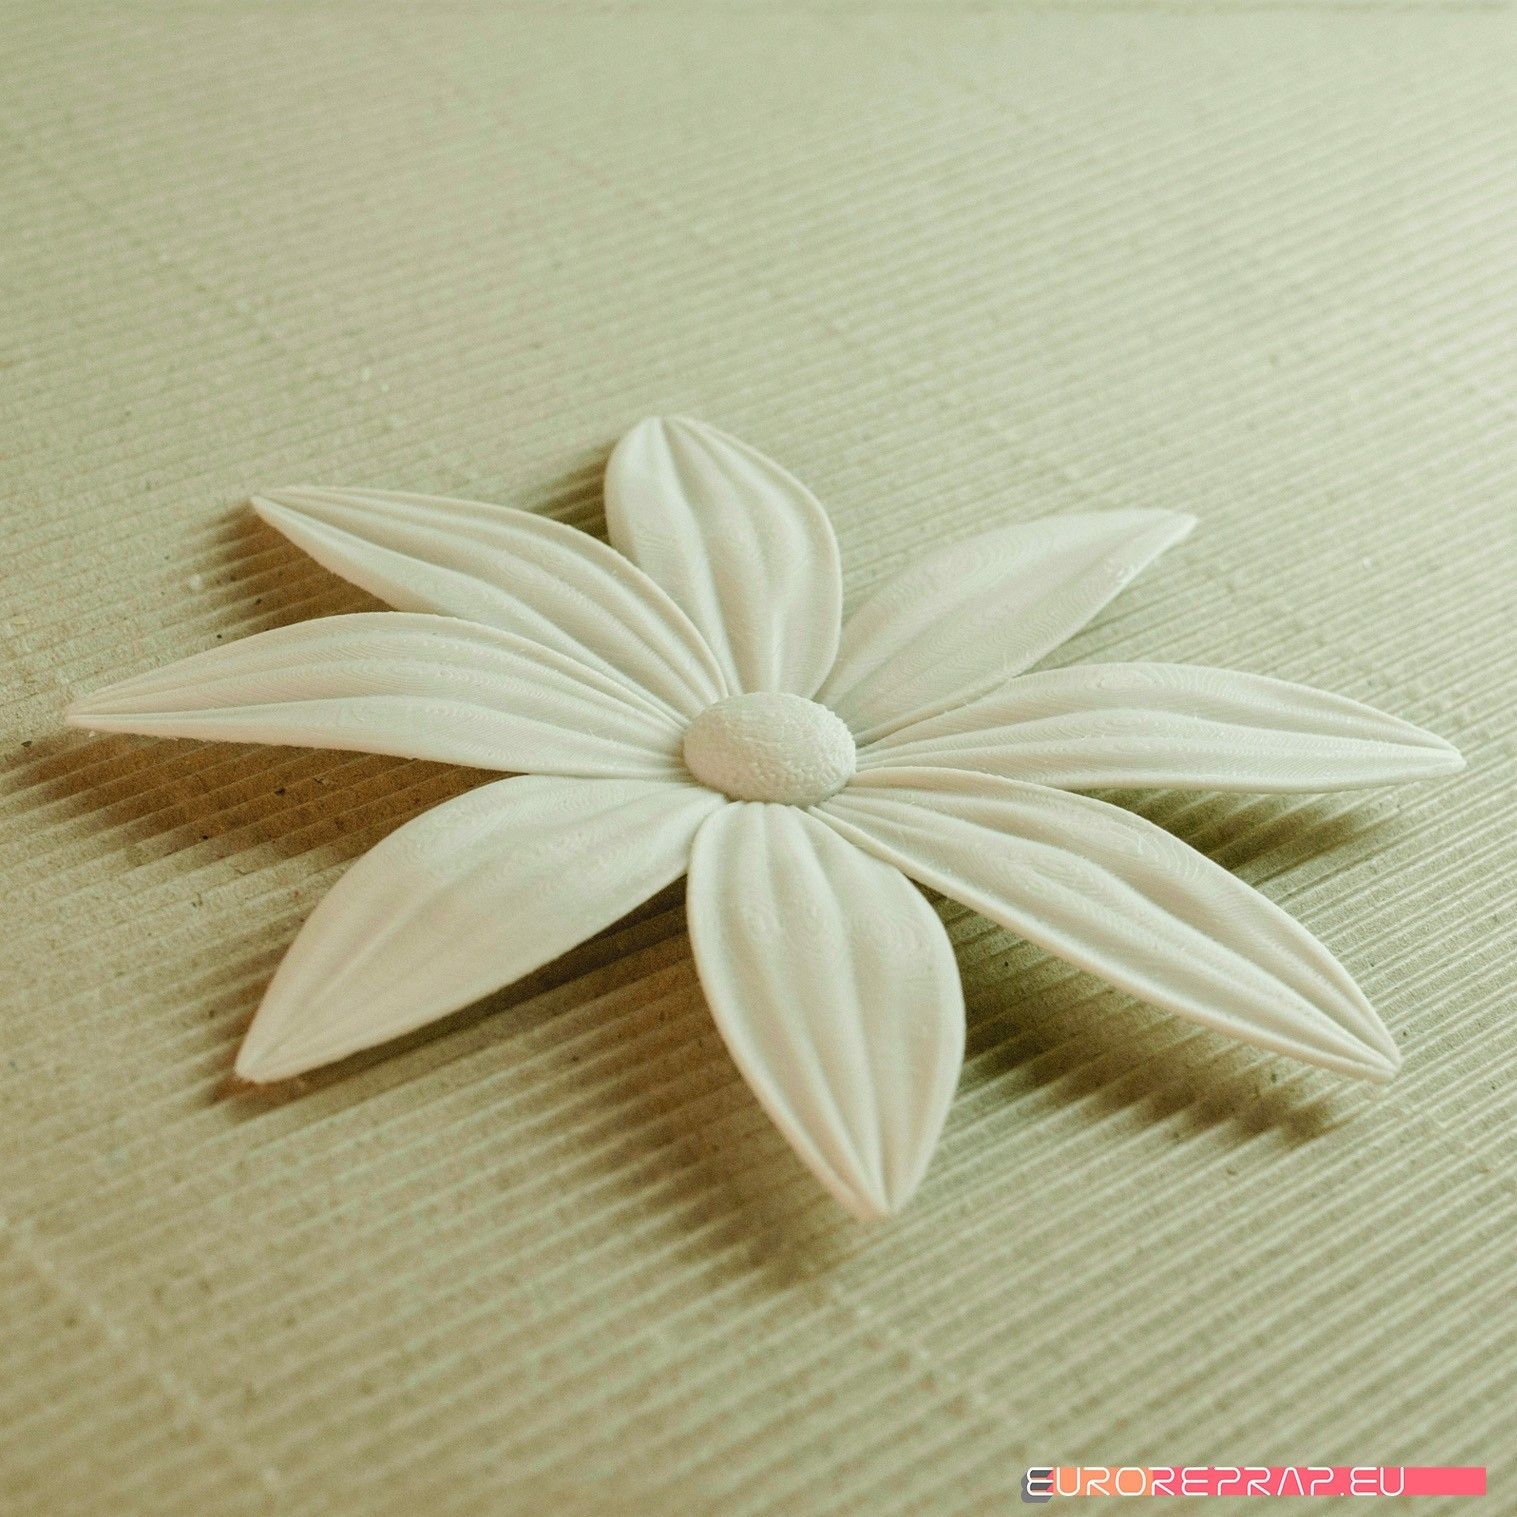 04b.jpg Download STL file flowers: Aster - 3D printable model • 3D printing model, euroreprap_eu